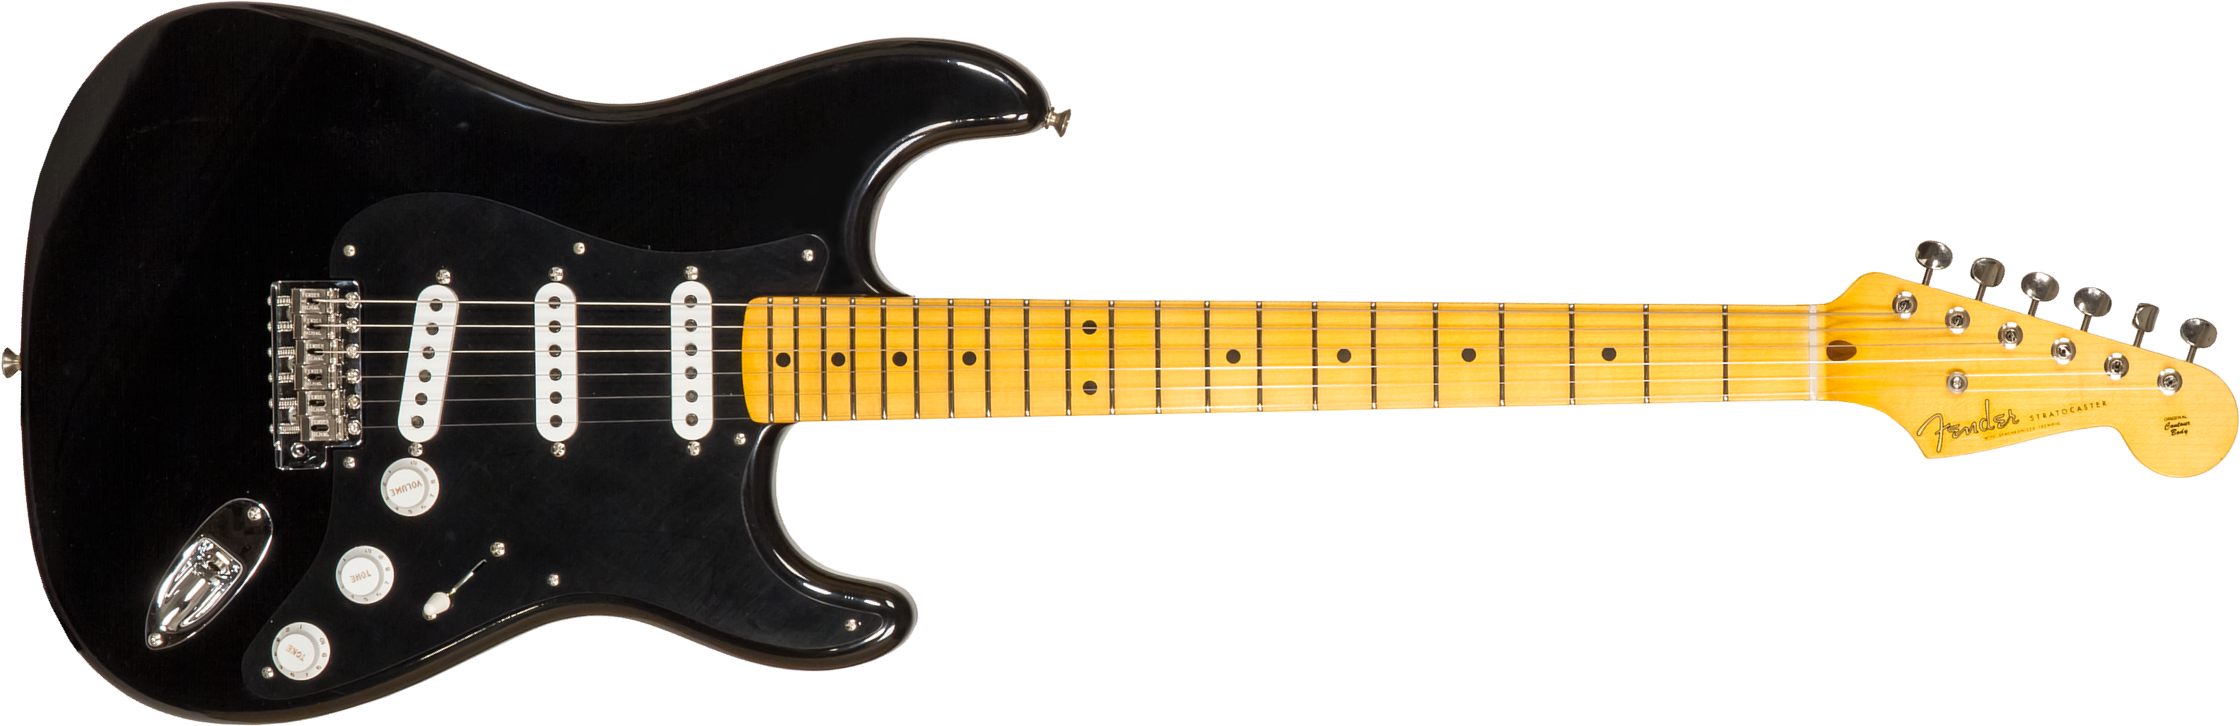 Fender Custom Shop Strat 1955 3s Trem Mn #r127877 - Closet Classic Black - E-Gitarre in Str-Form - Main picture